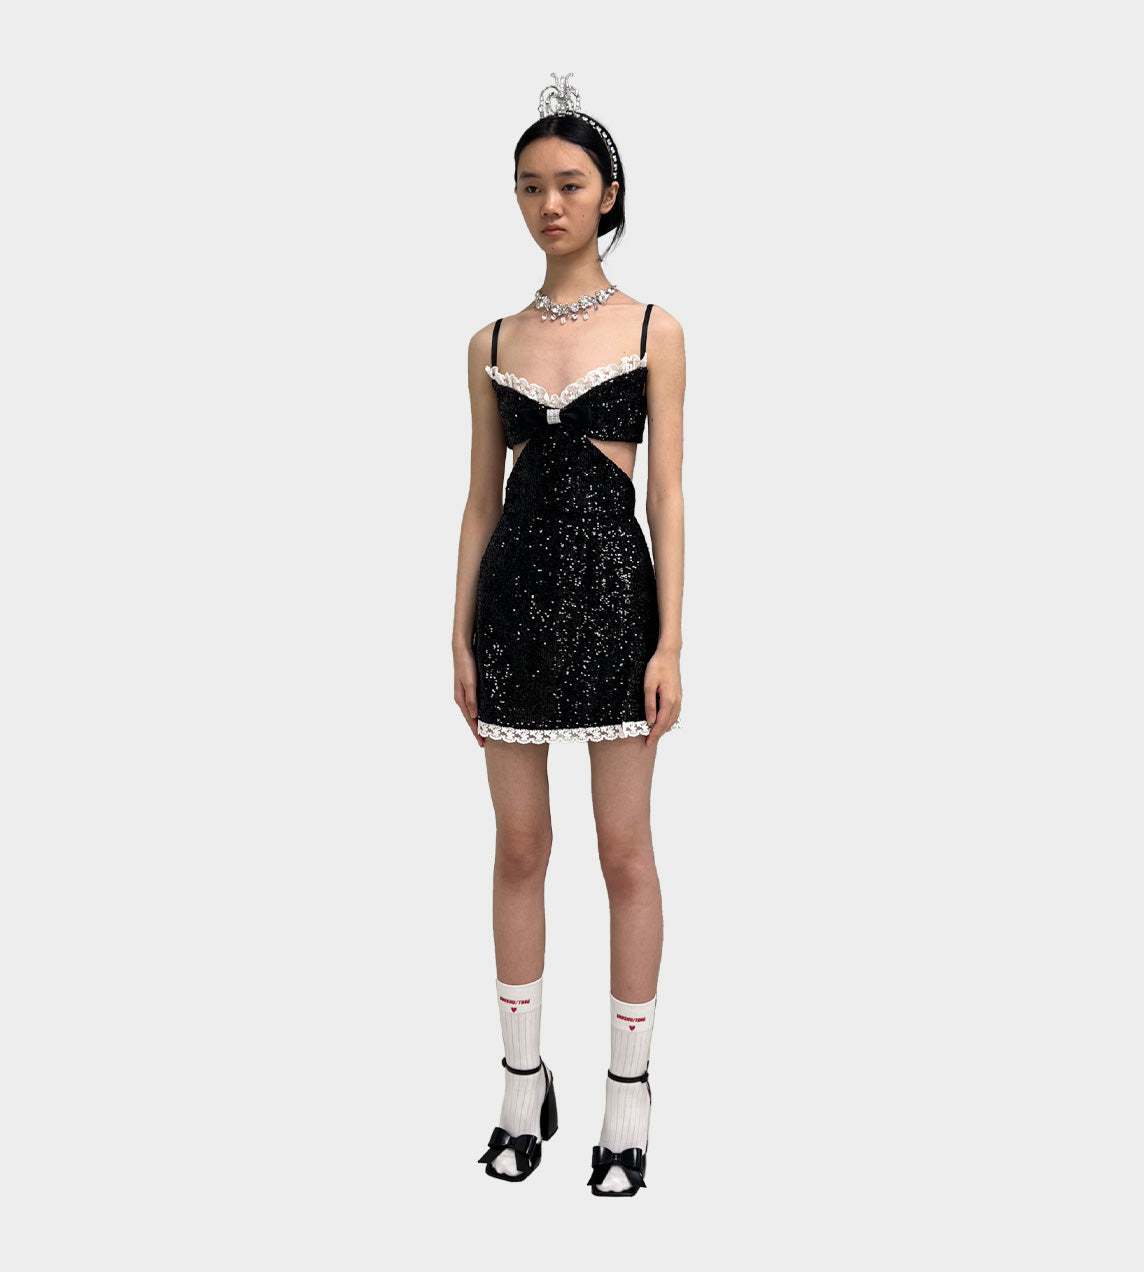 ShuShu/Tong - Lace Trimmed Cut-out Dress Black